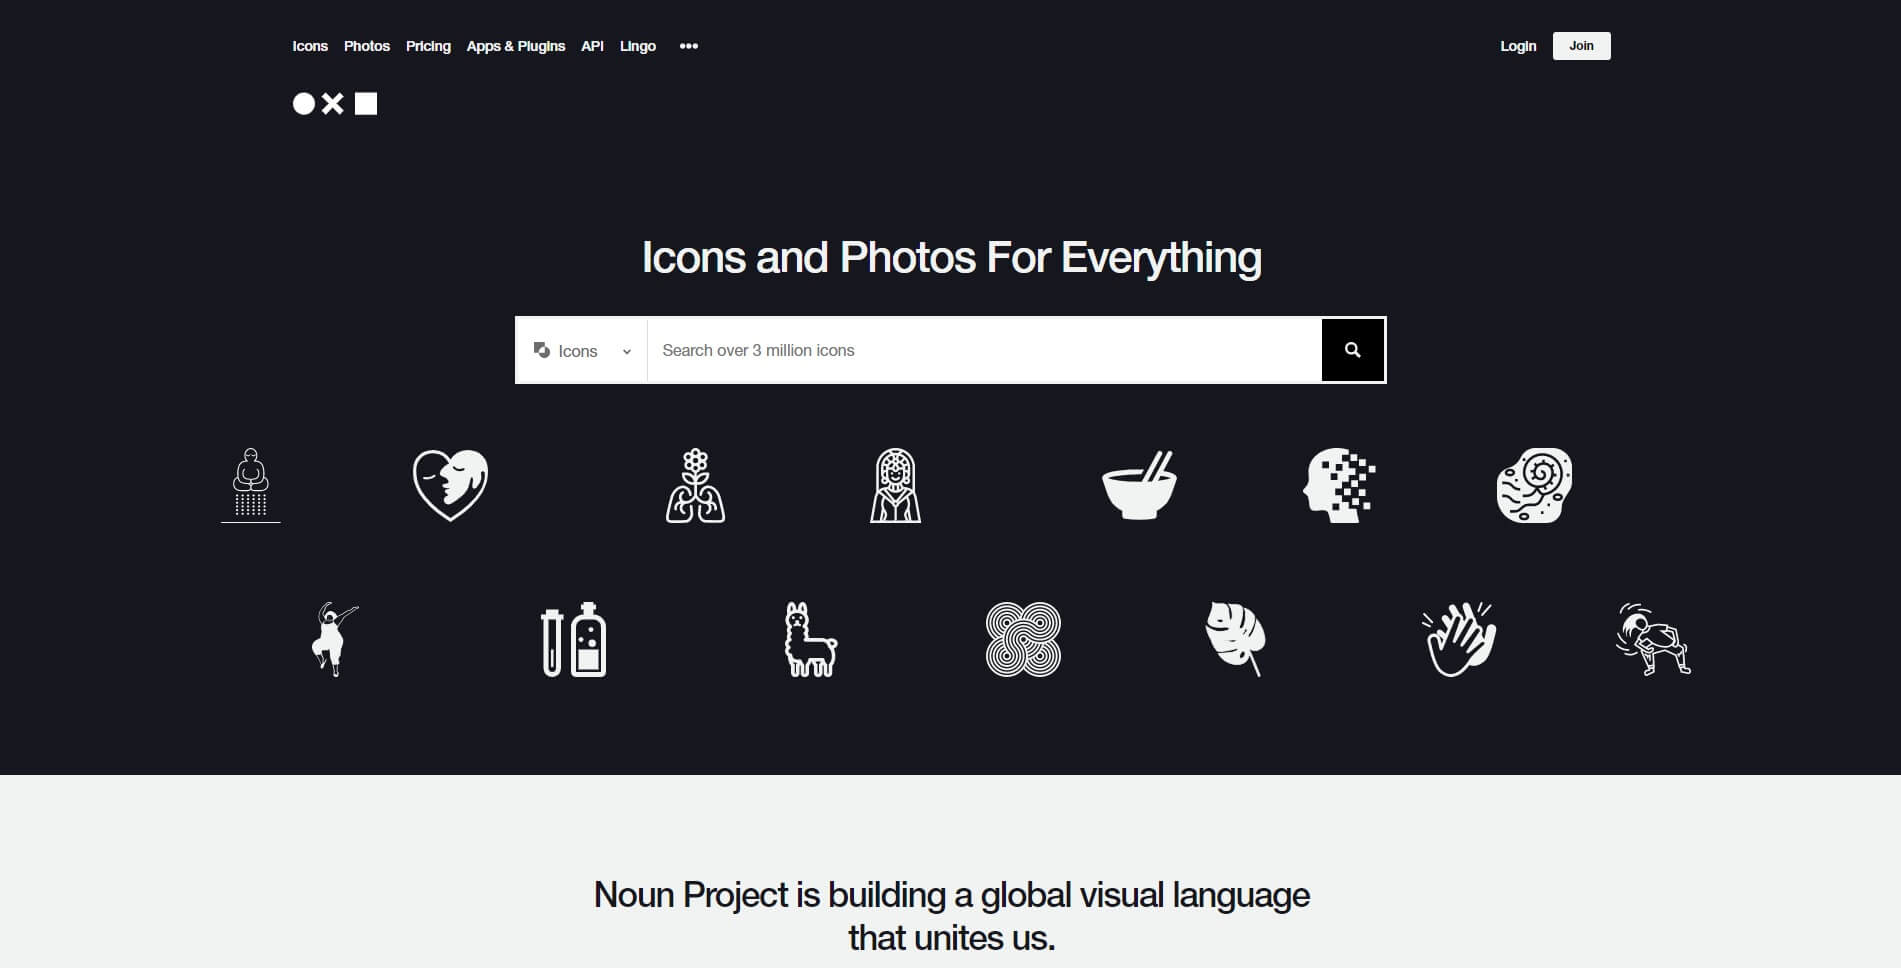 Gratis stockfoto's Noun Project